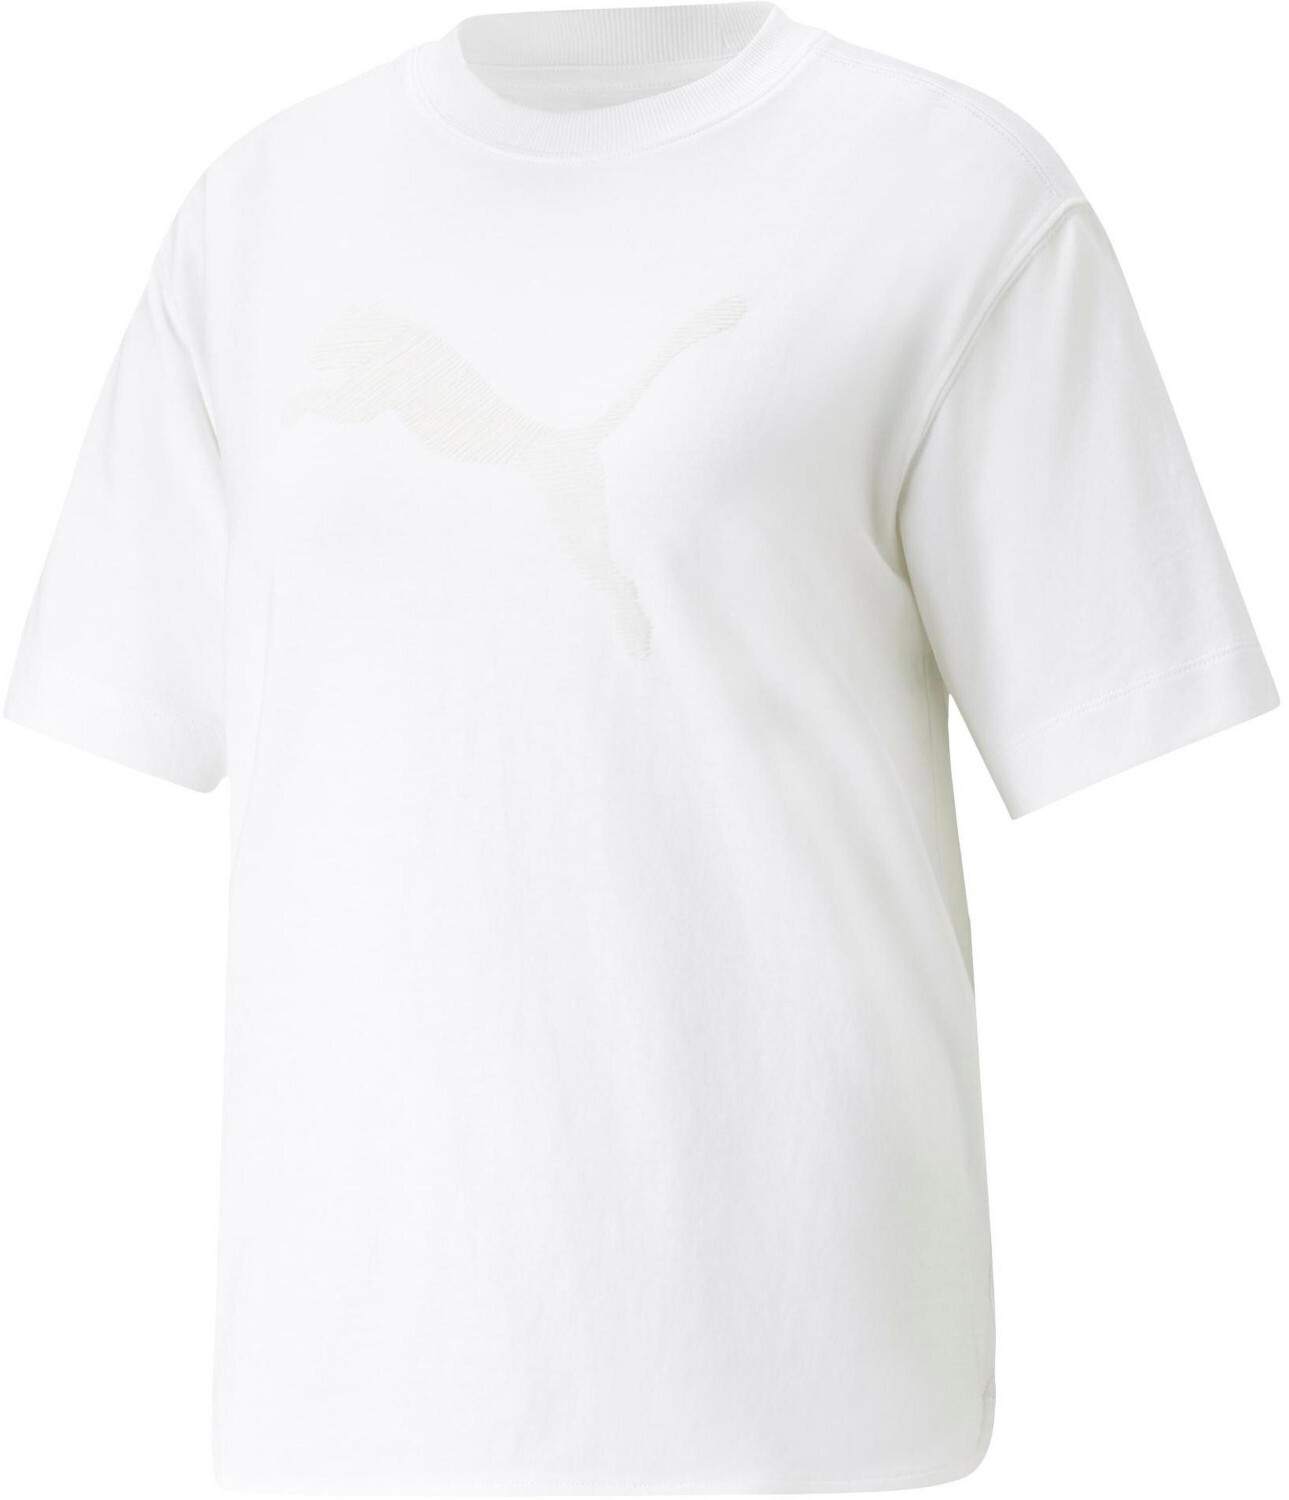 white 17,99 bei Damen T-Shirt (673107) € Preisvergleich HER ab Puma |